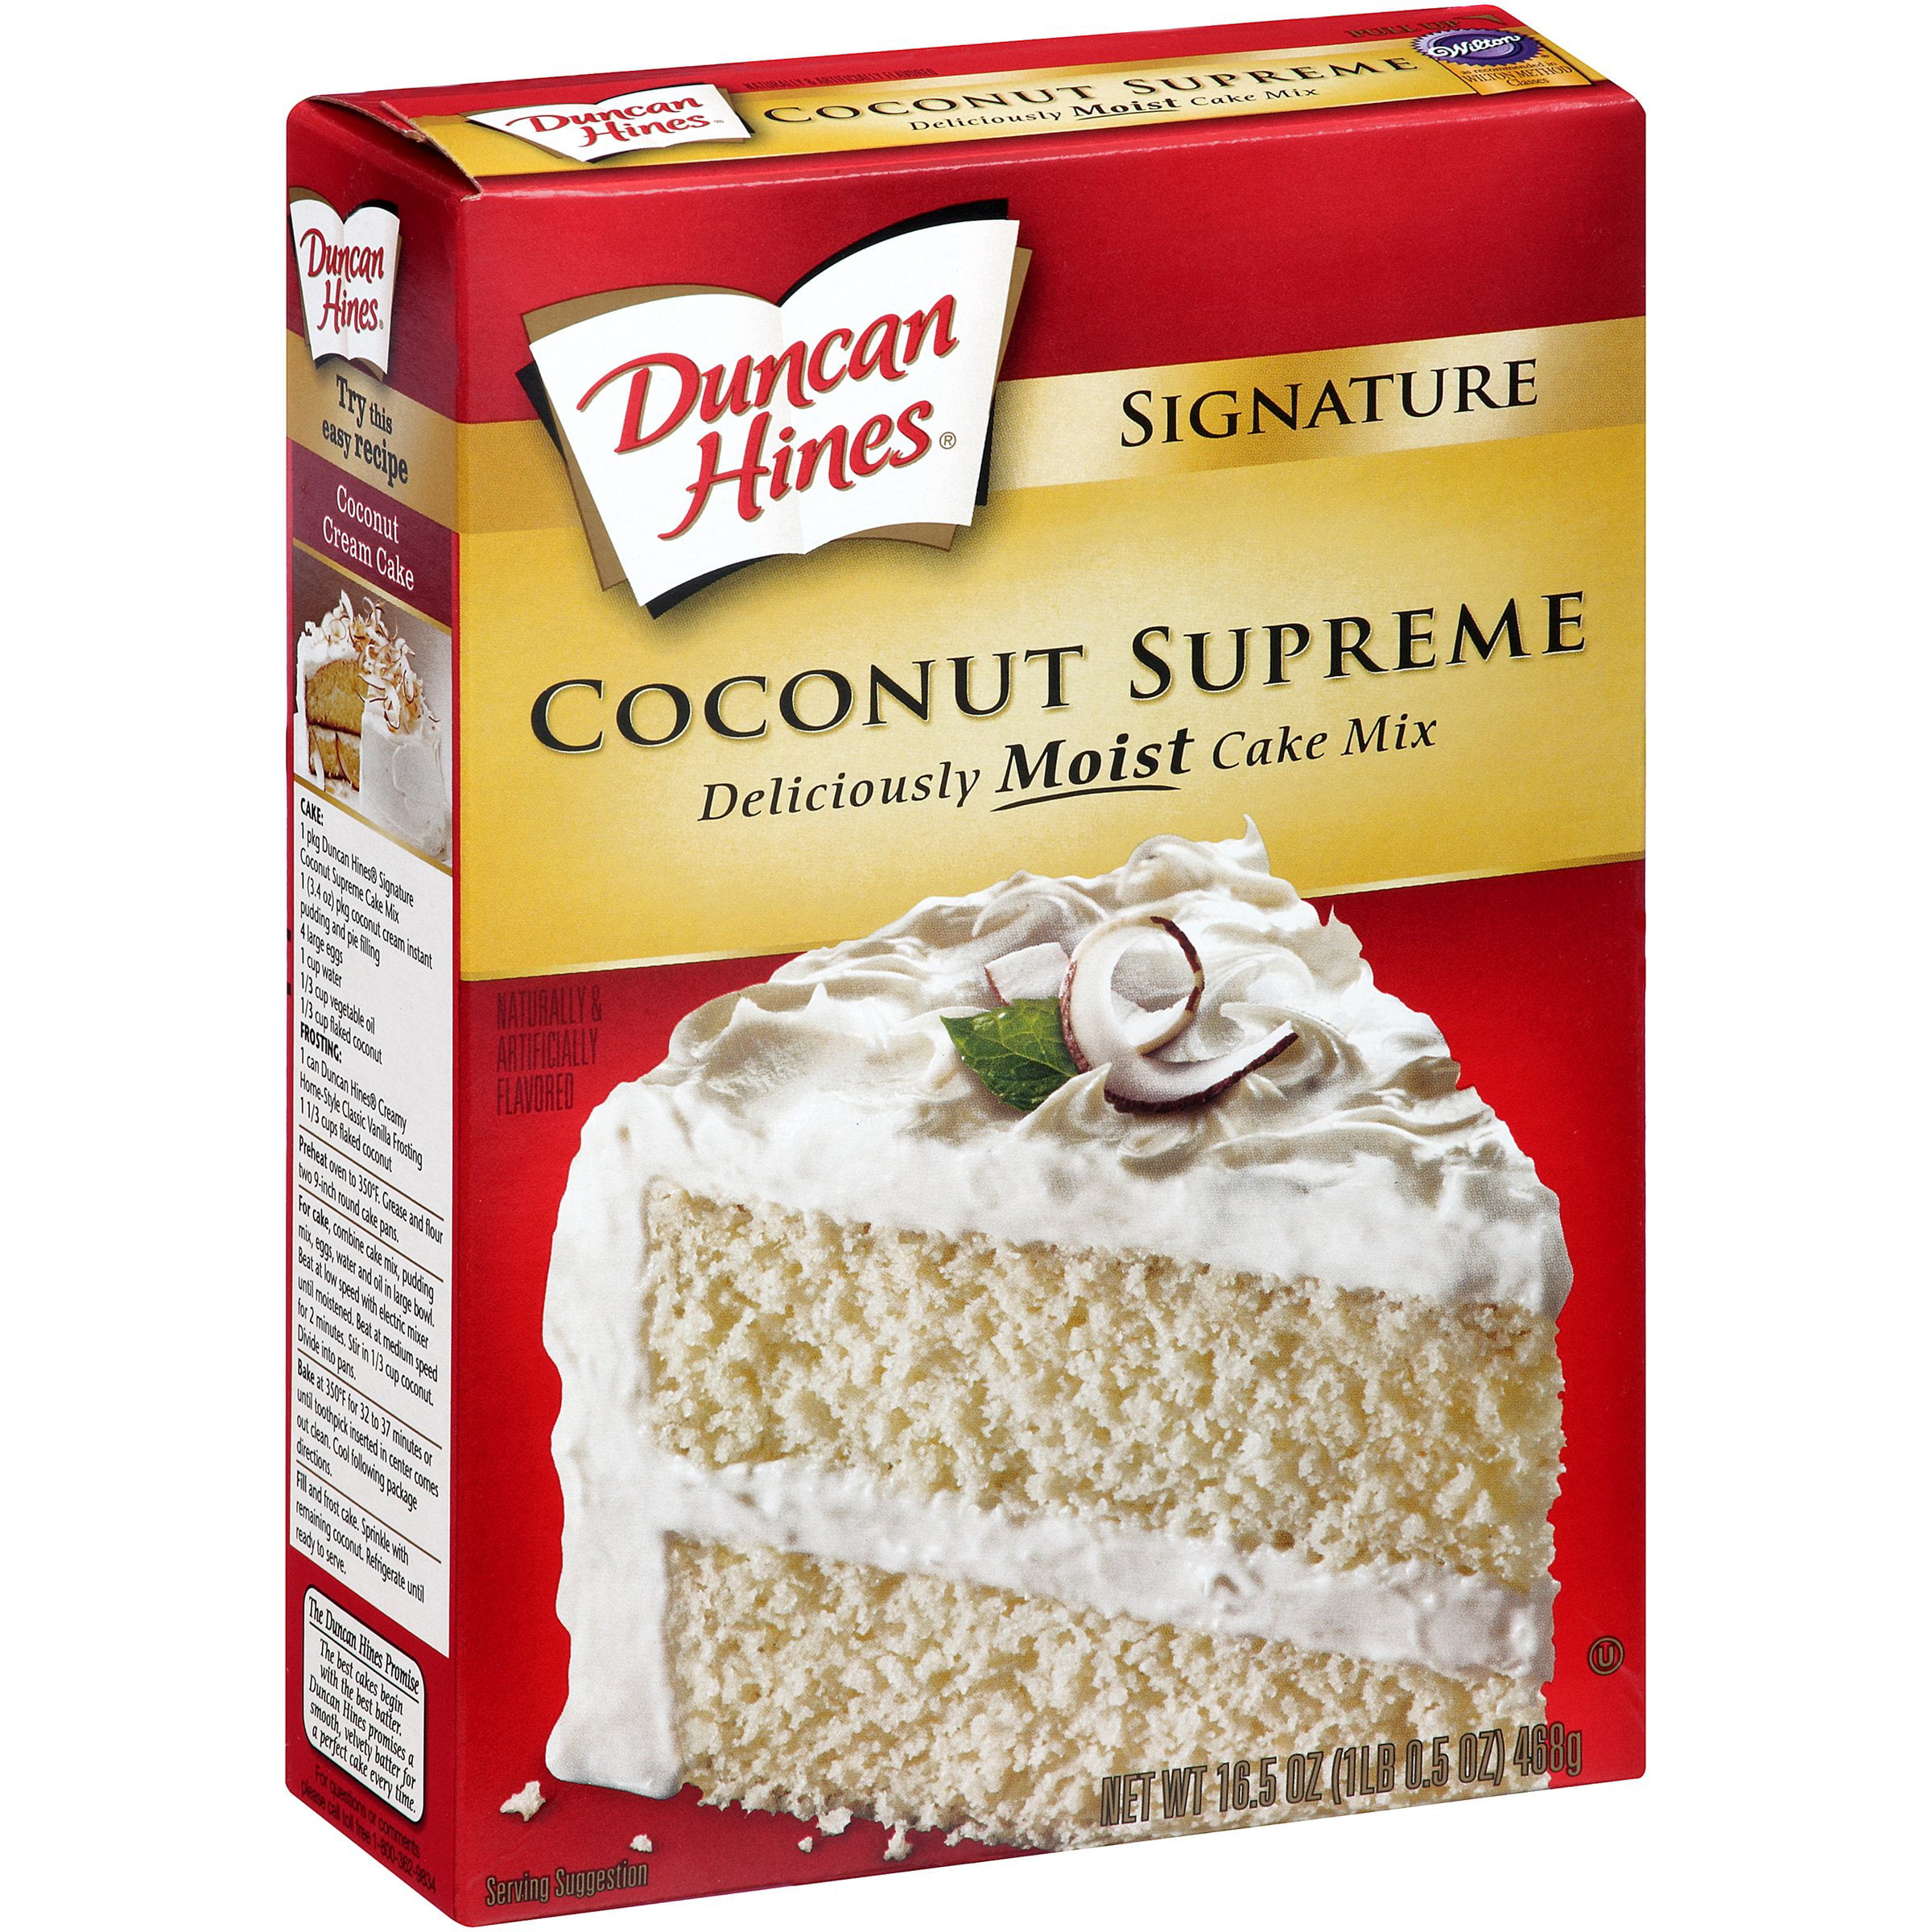 Signature Coconut Supreme Cake Mix 16 5